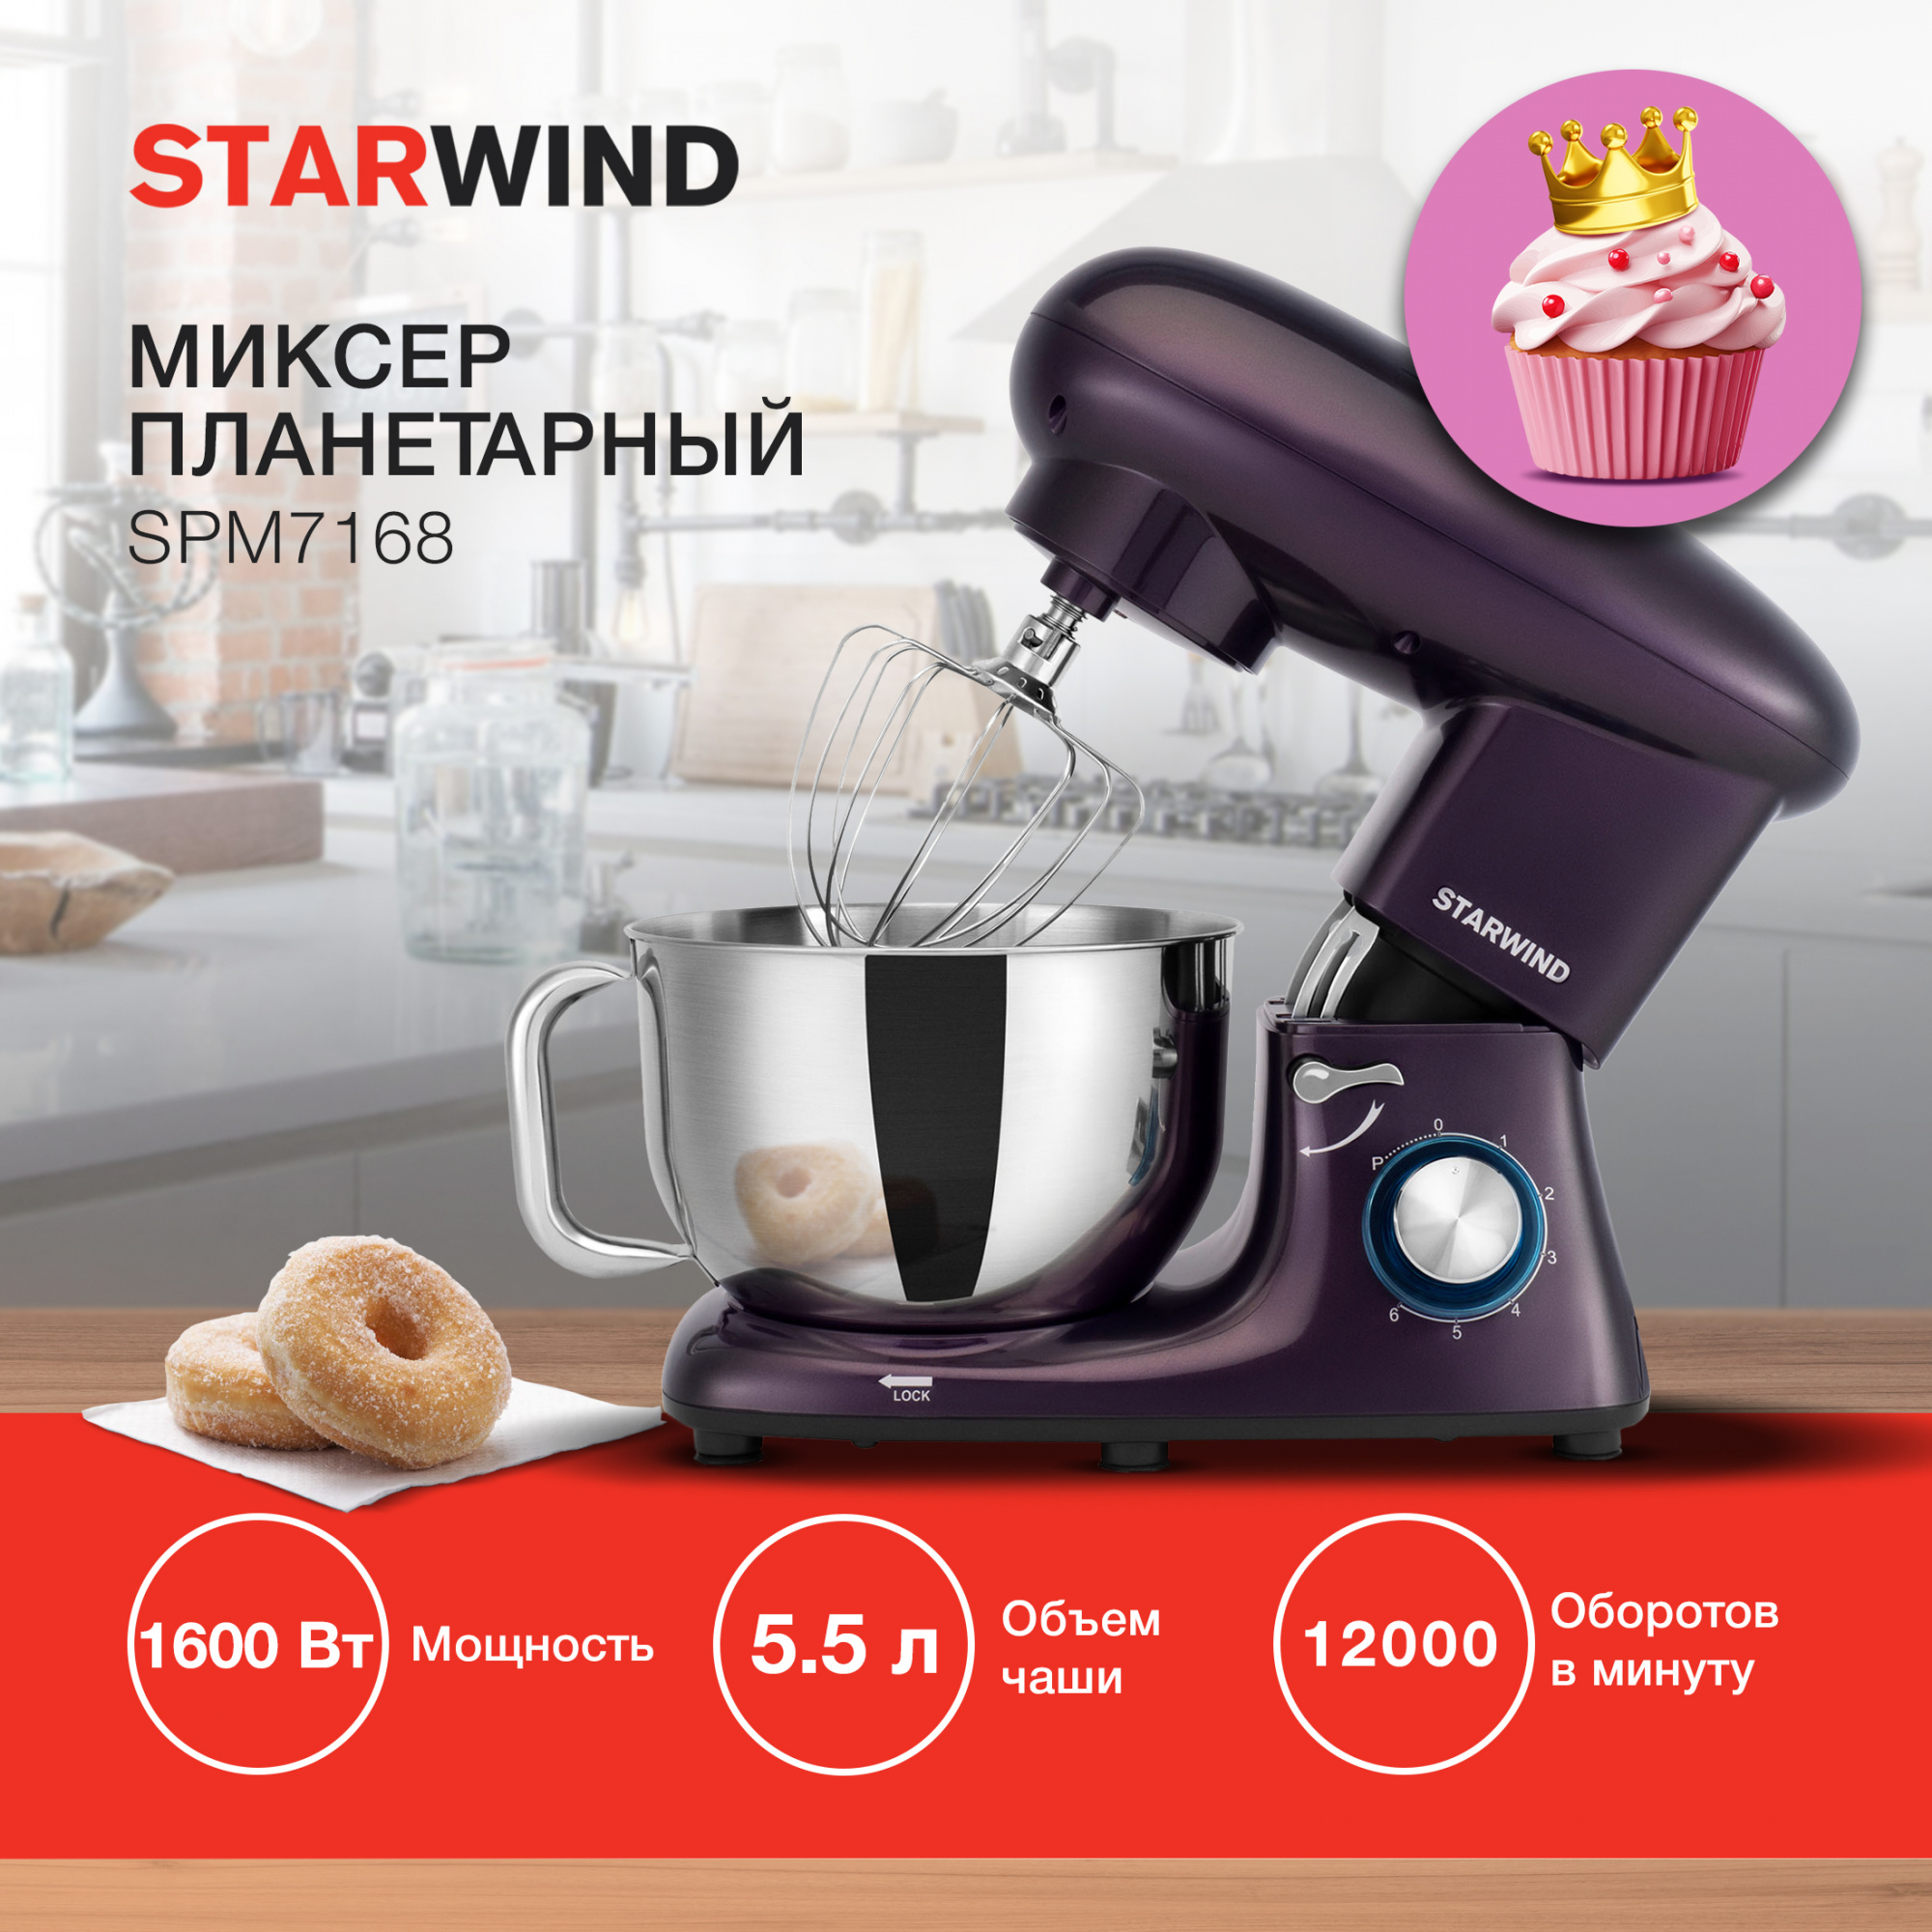 Миксер планетарный Starwind SPM7168 ежевичный от магазина Старвинд